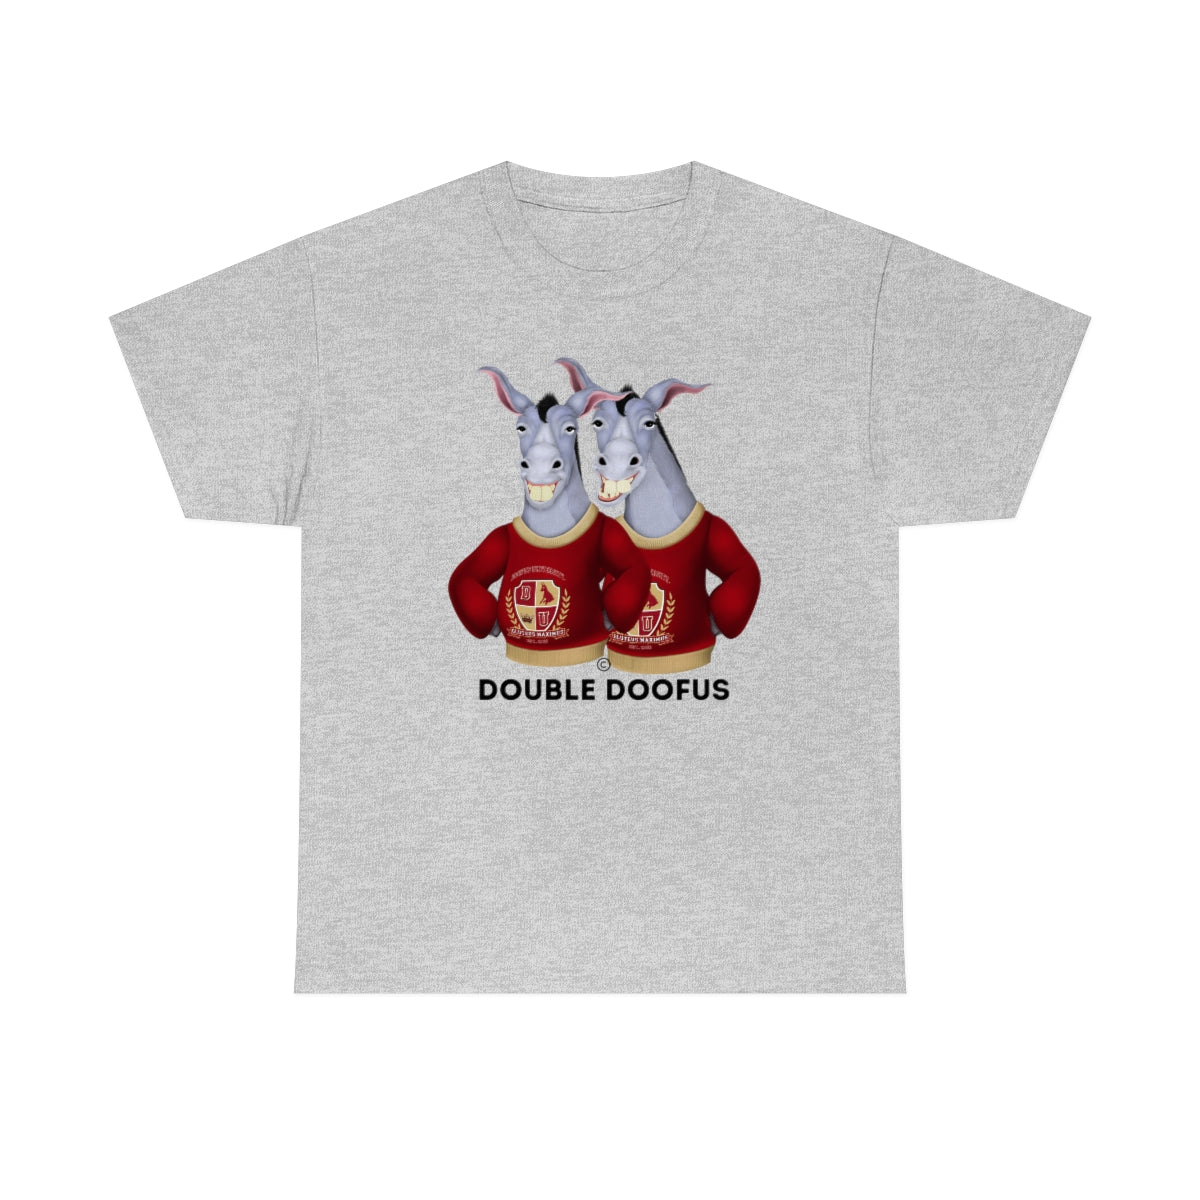 Twin Doofuses! Unisex T-Shirt Short Sleeve Funny Gag Gift